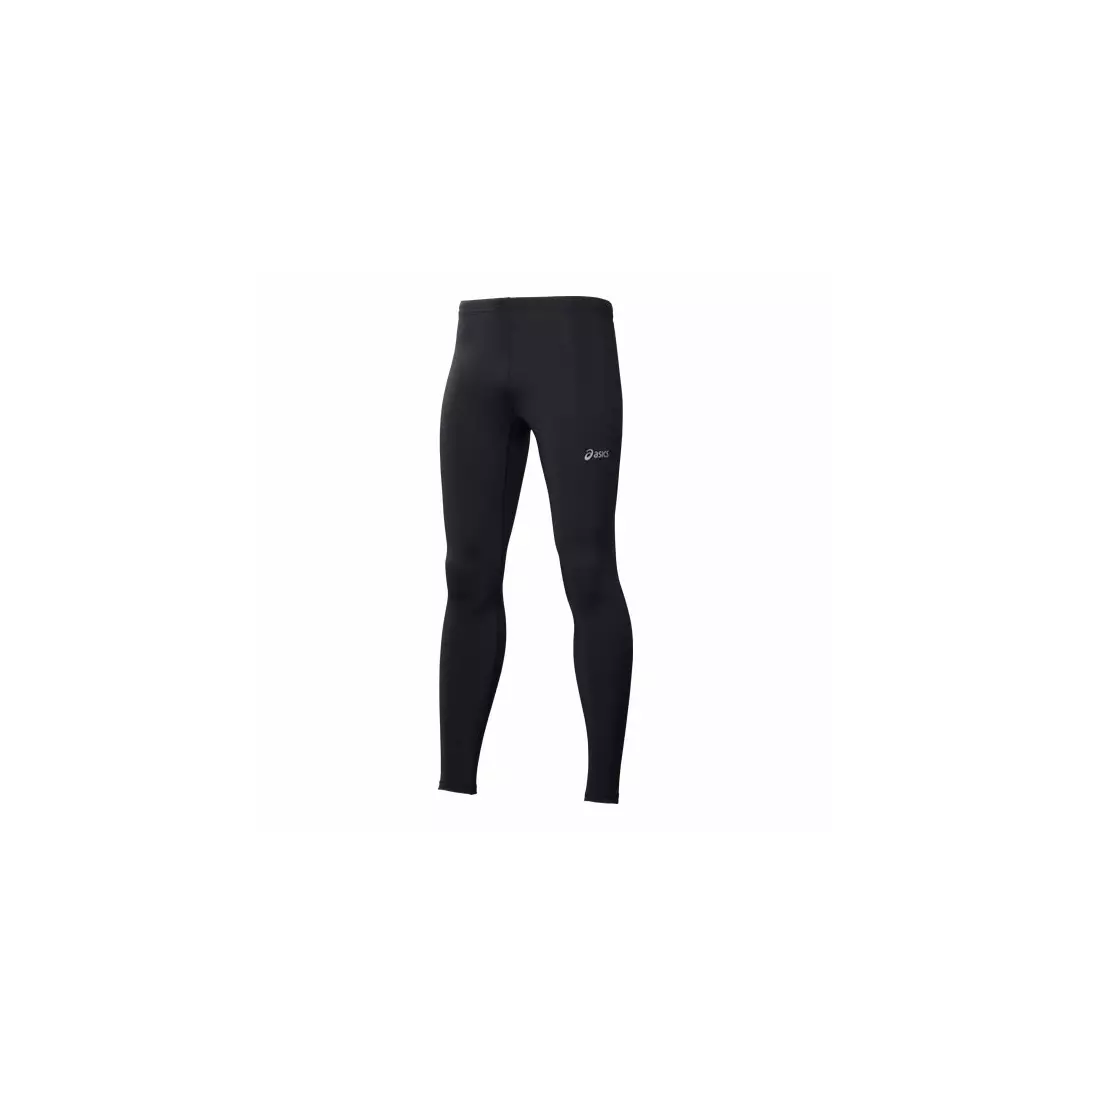 ASICS 113462-0904 - men's ESSENTIAL TIGHT pants, color: black